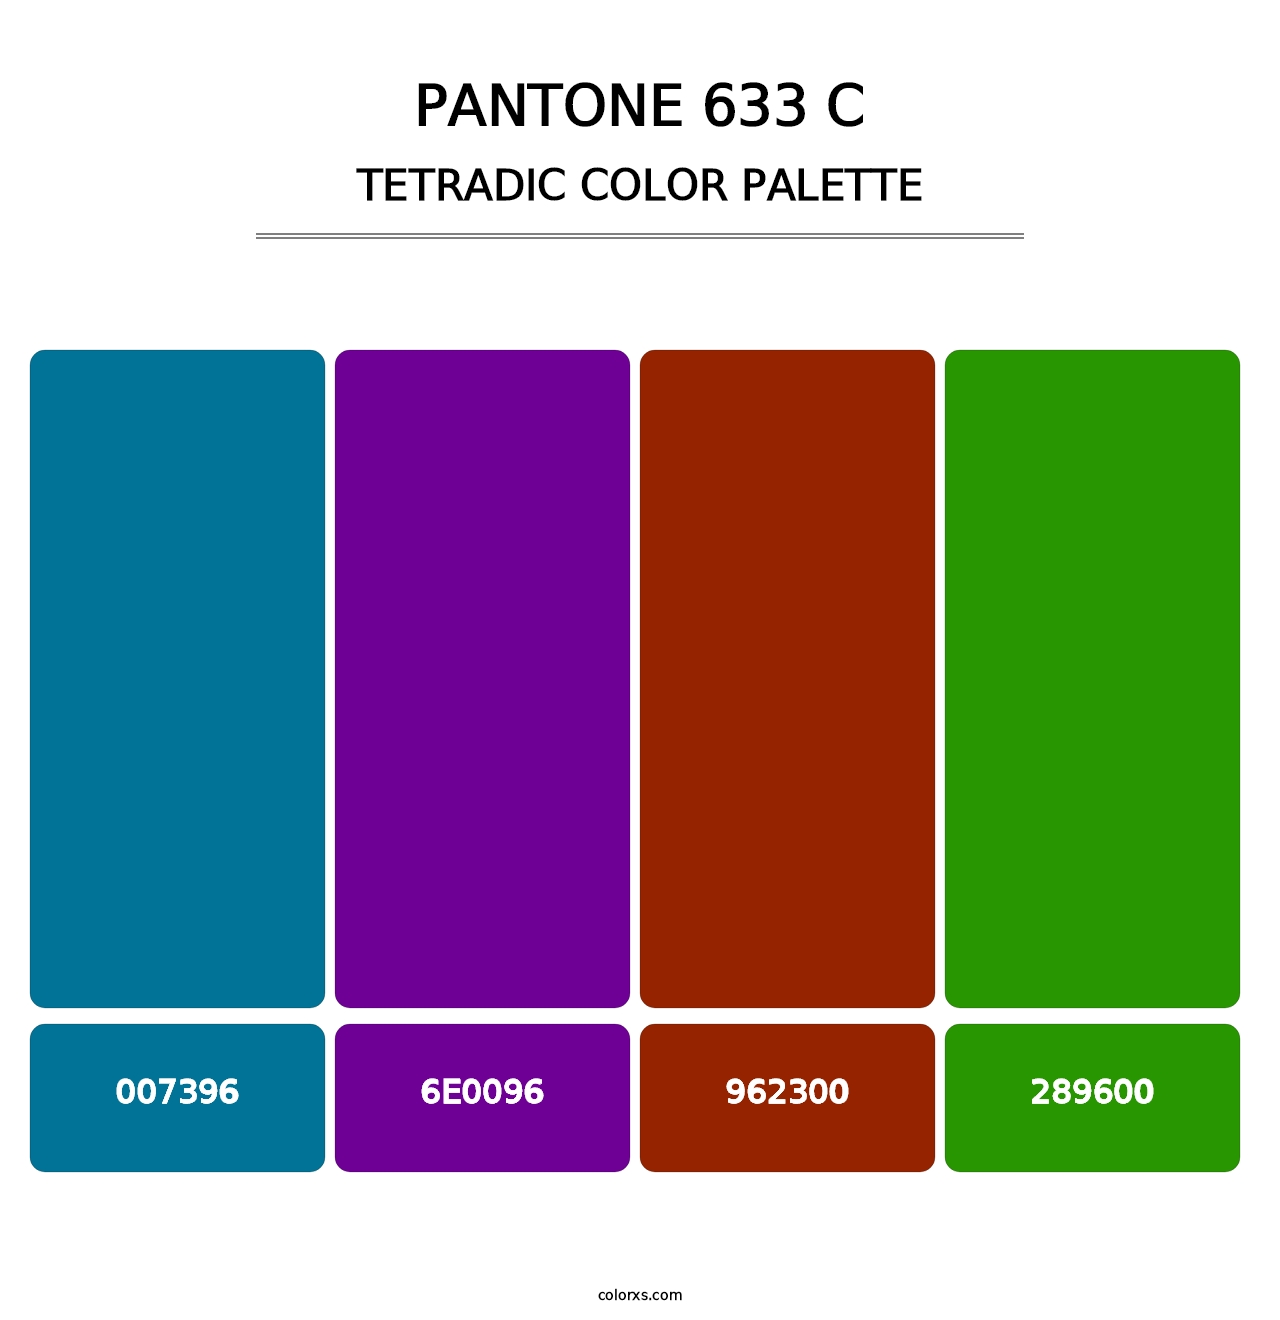 PANTONE 633 C - Tetradic Color Palette